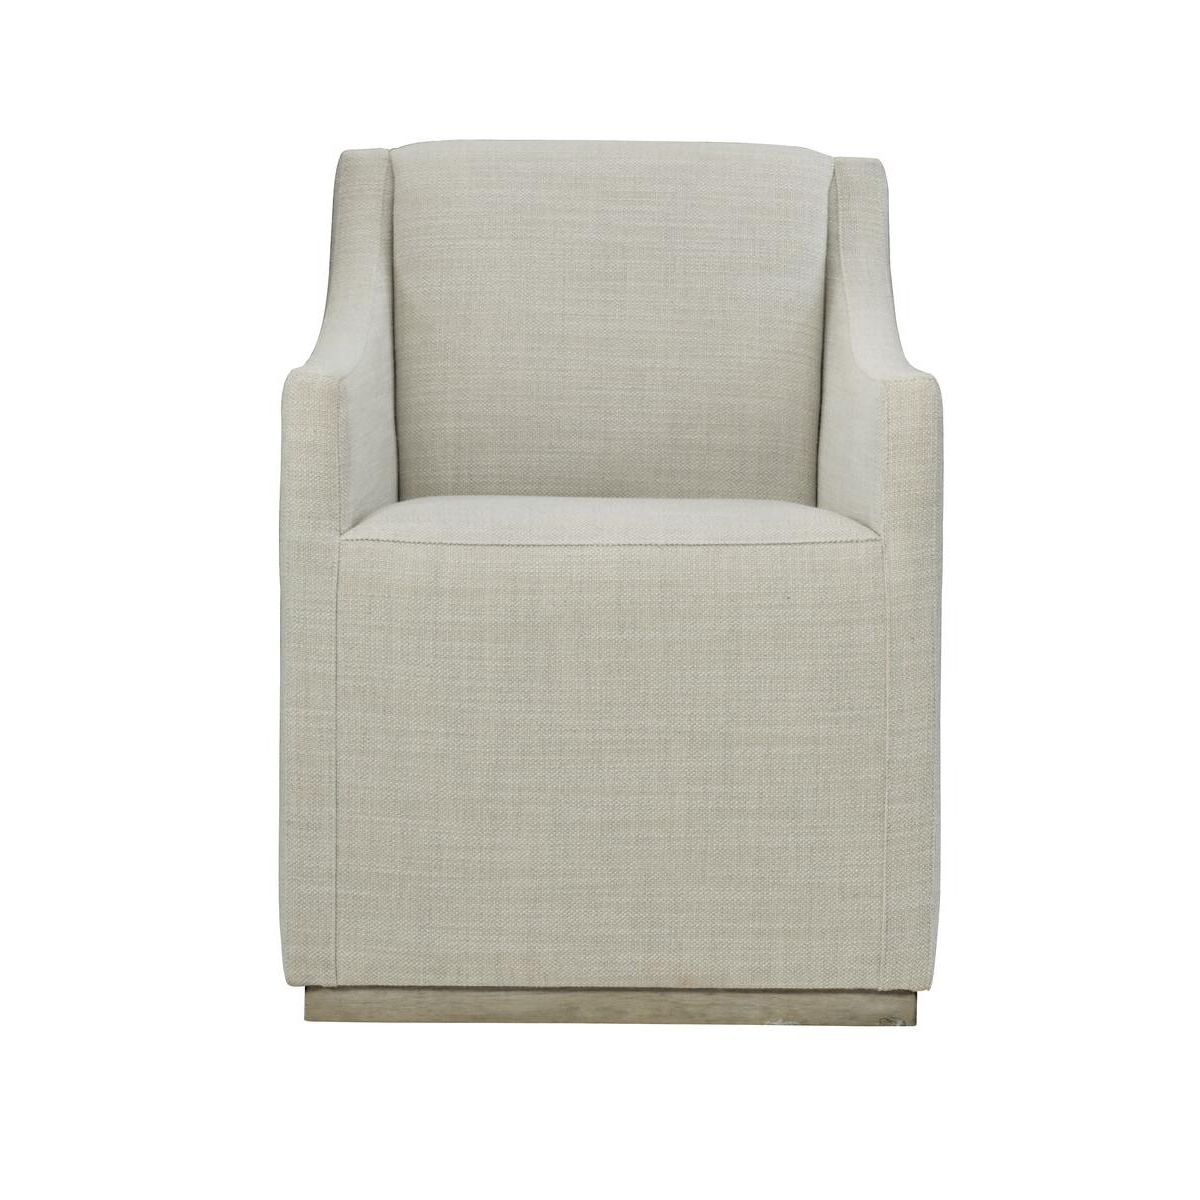 Highland Park Upholstered Arm Chair